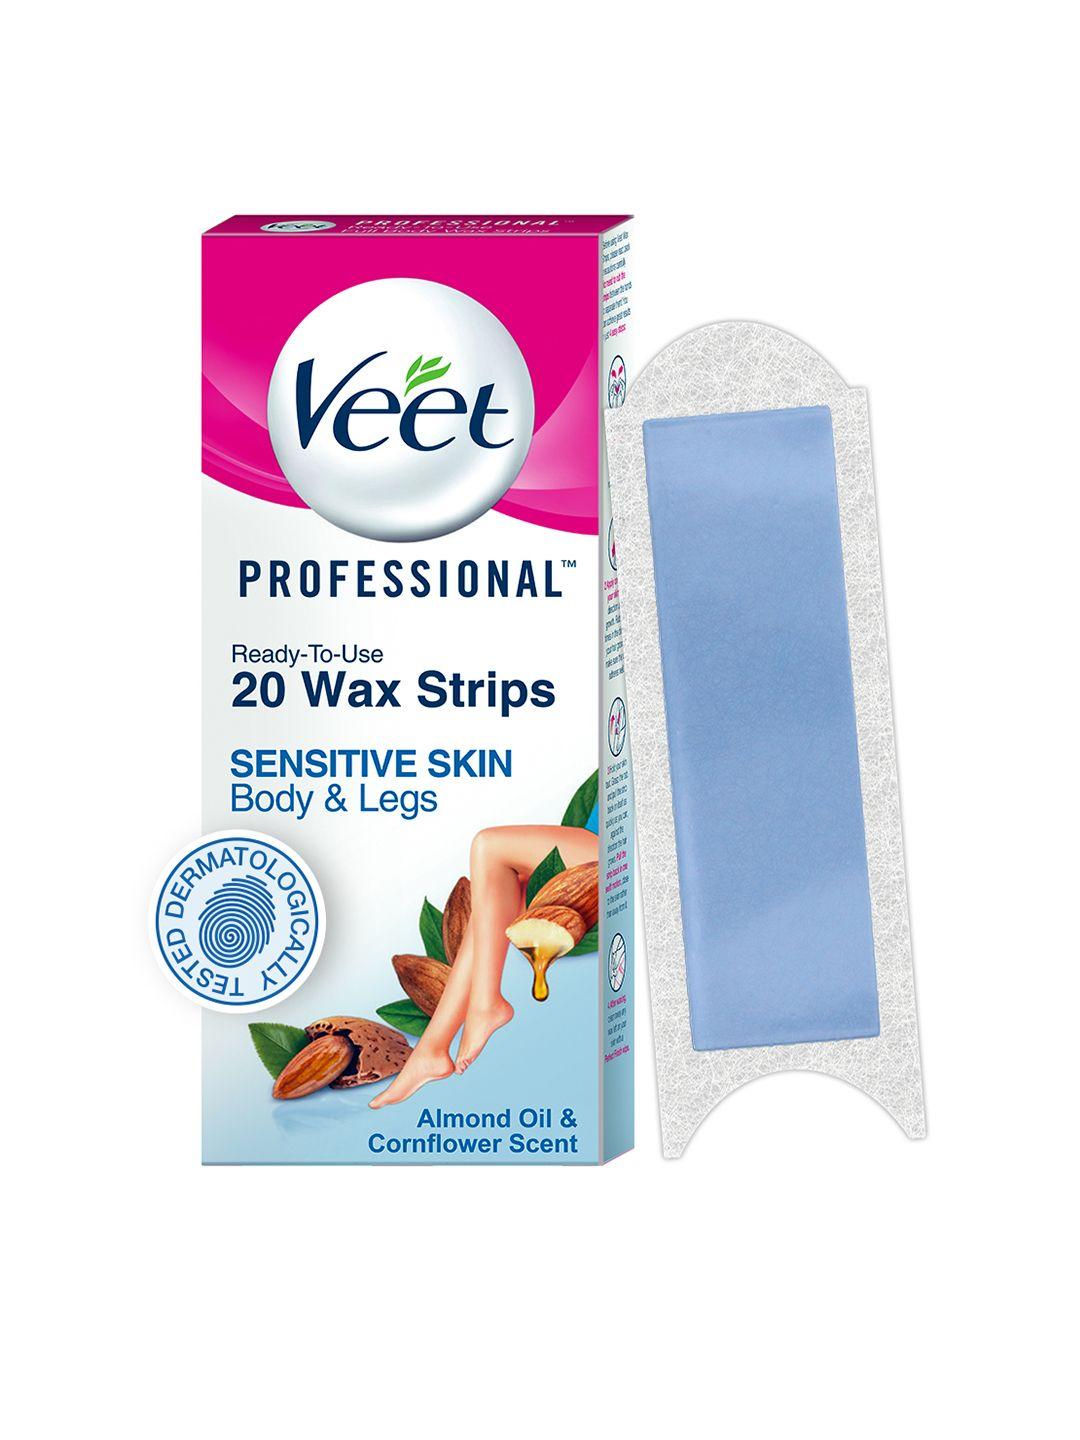 veet professional waxing strips for sensitive skin - 20 strips